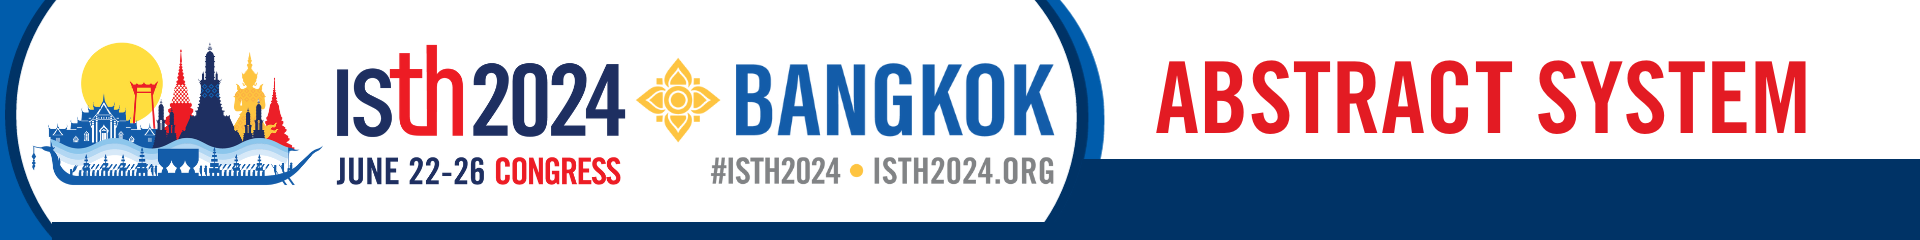 ISTH 2024 Congress Event Banner